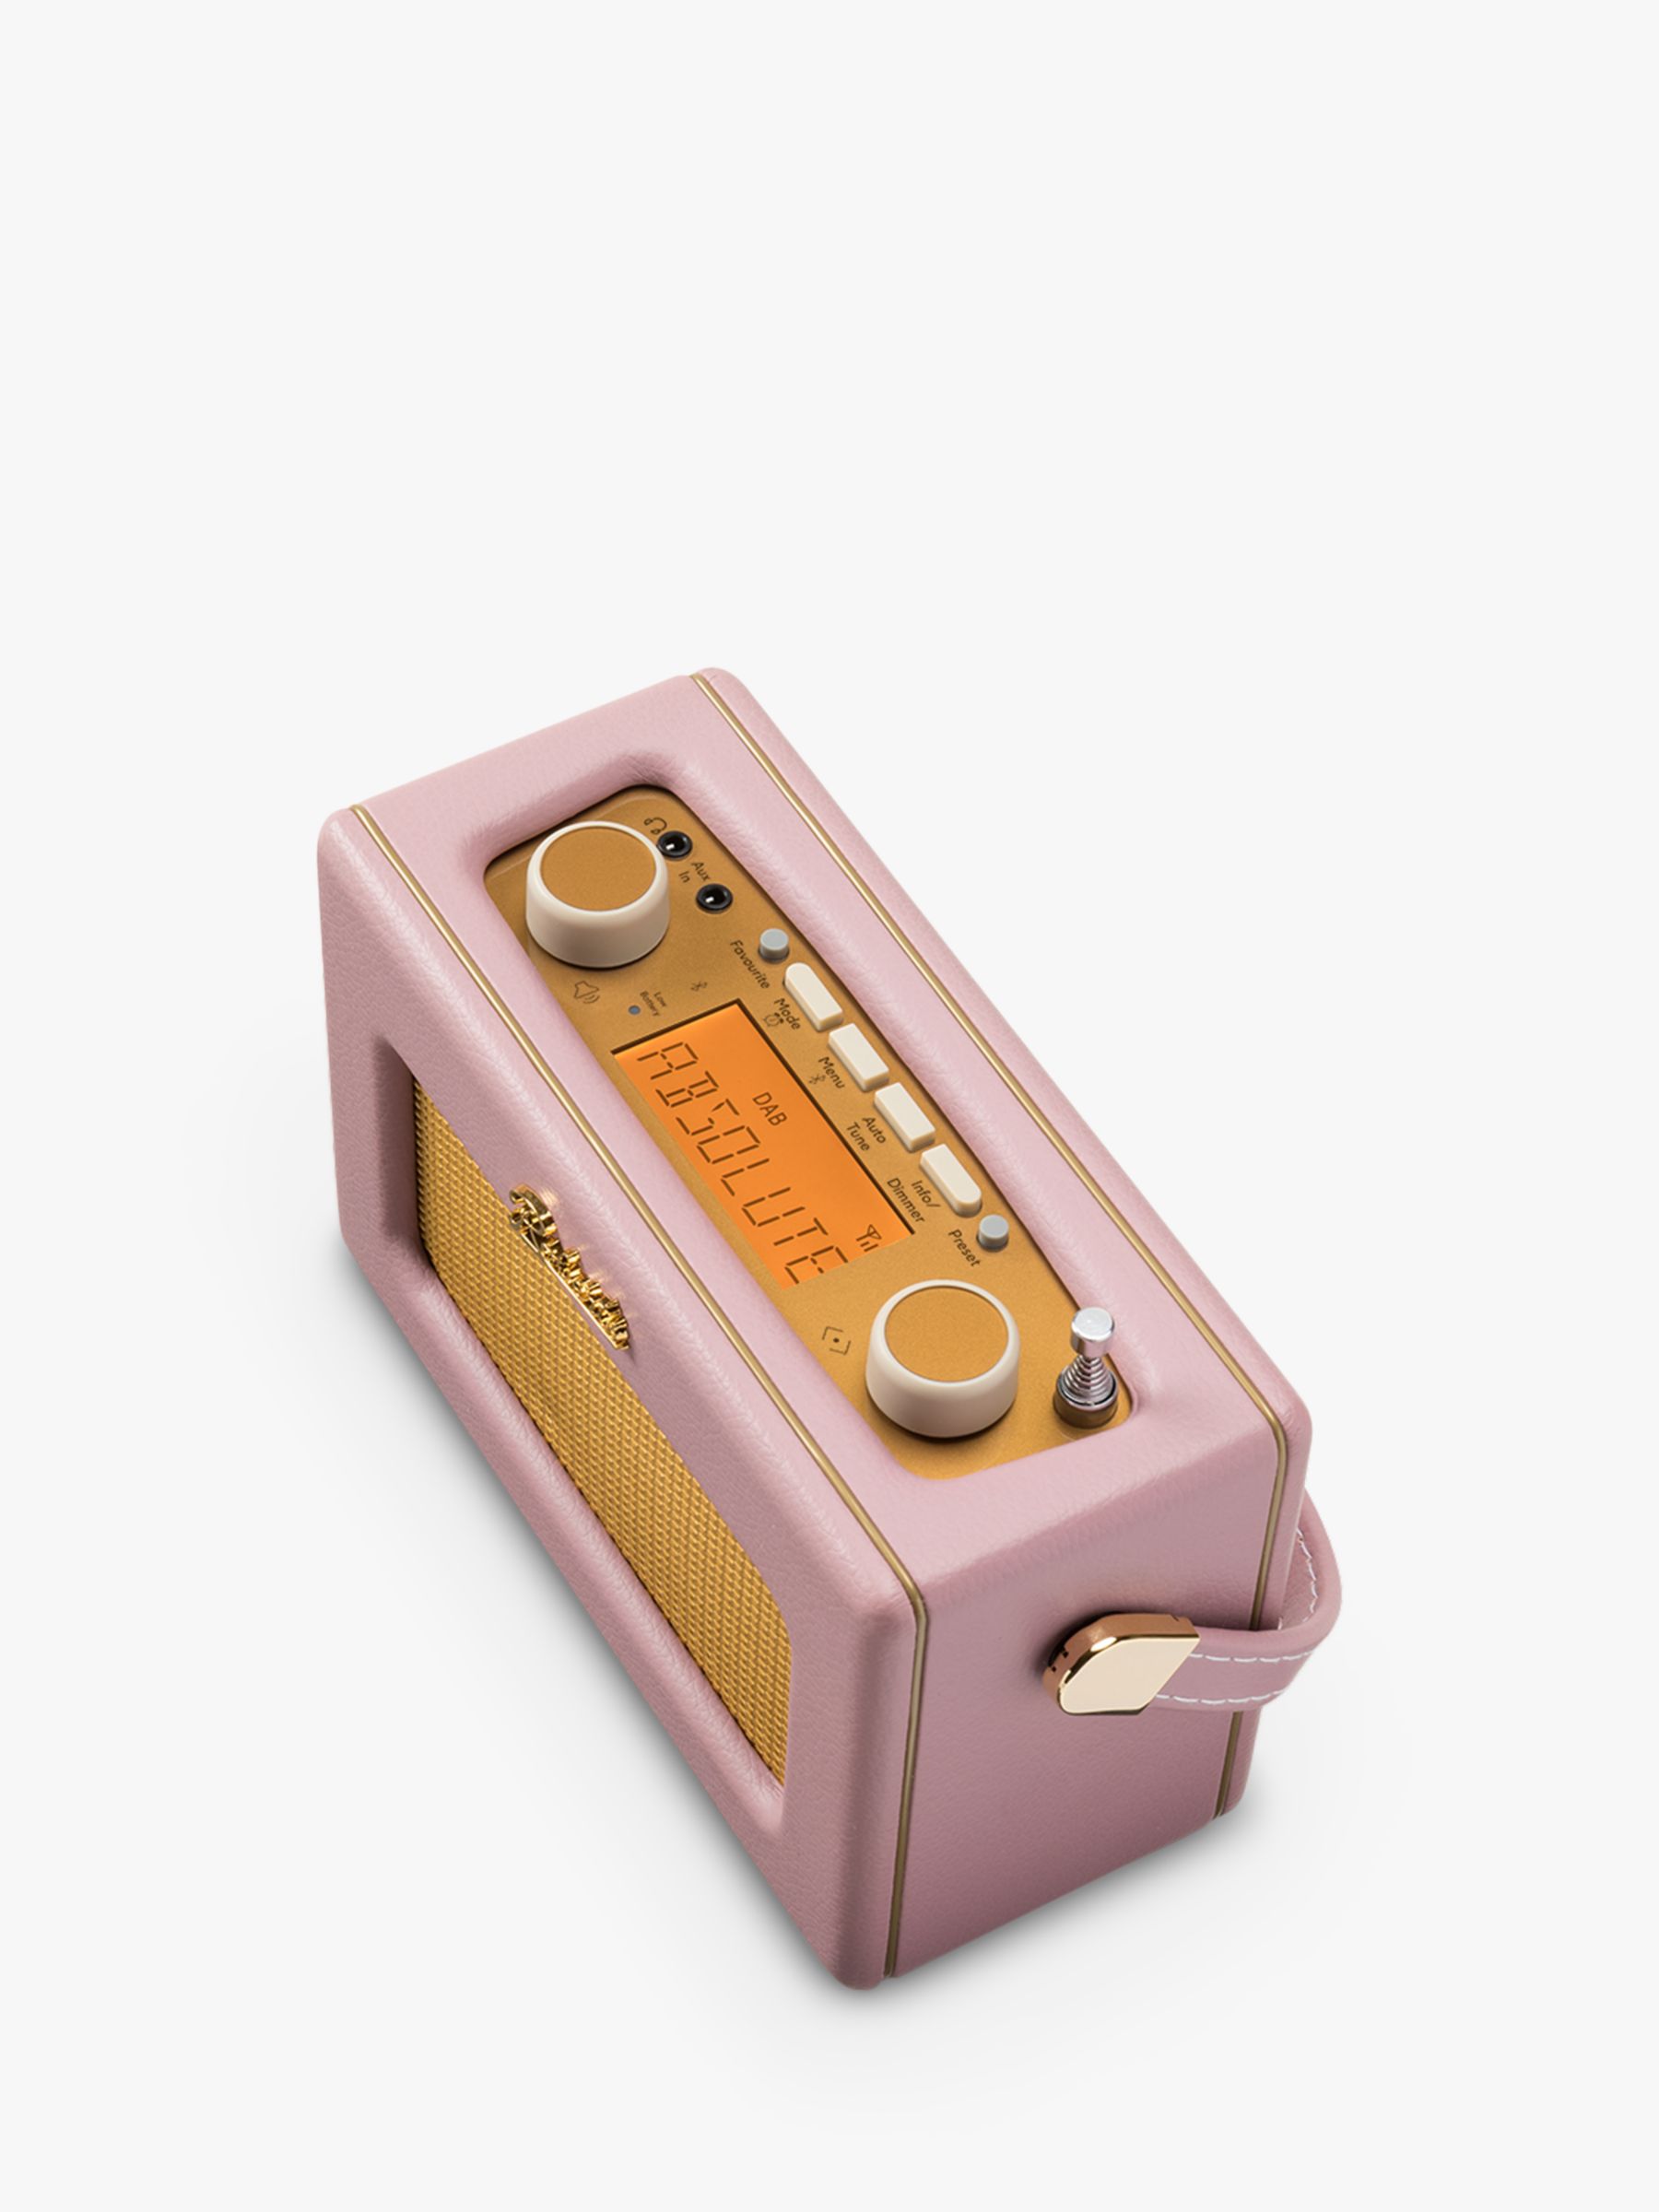 Digital BT Roberts Radio Bluetooth Pastel DAB/DAB+/FM with Uno Revival Cream Alarm,